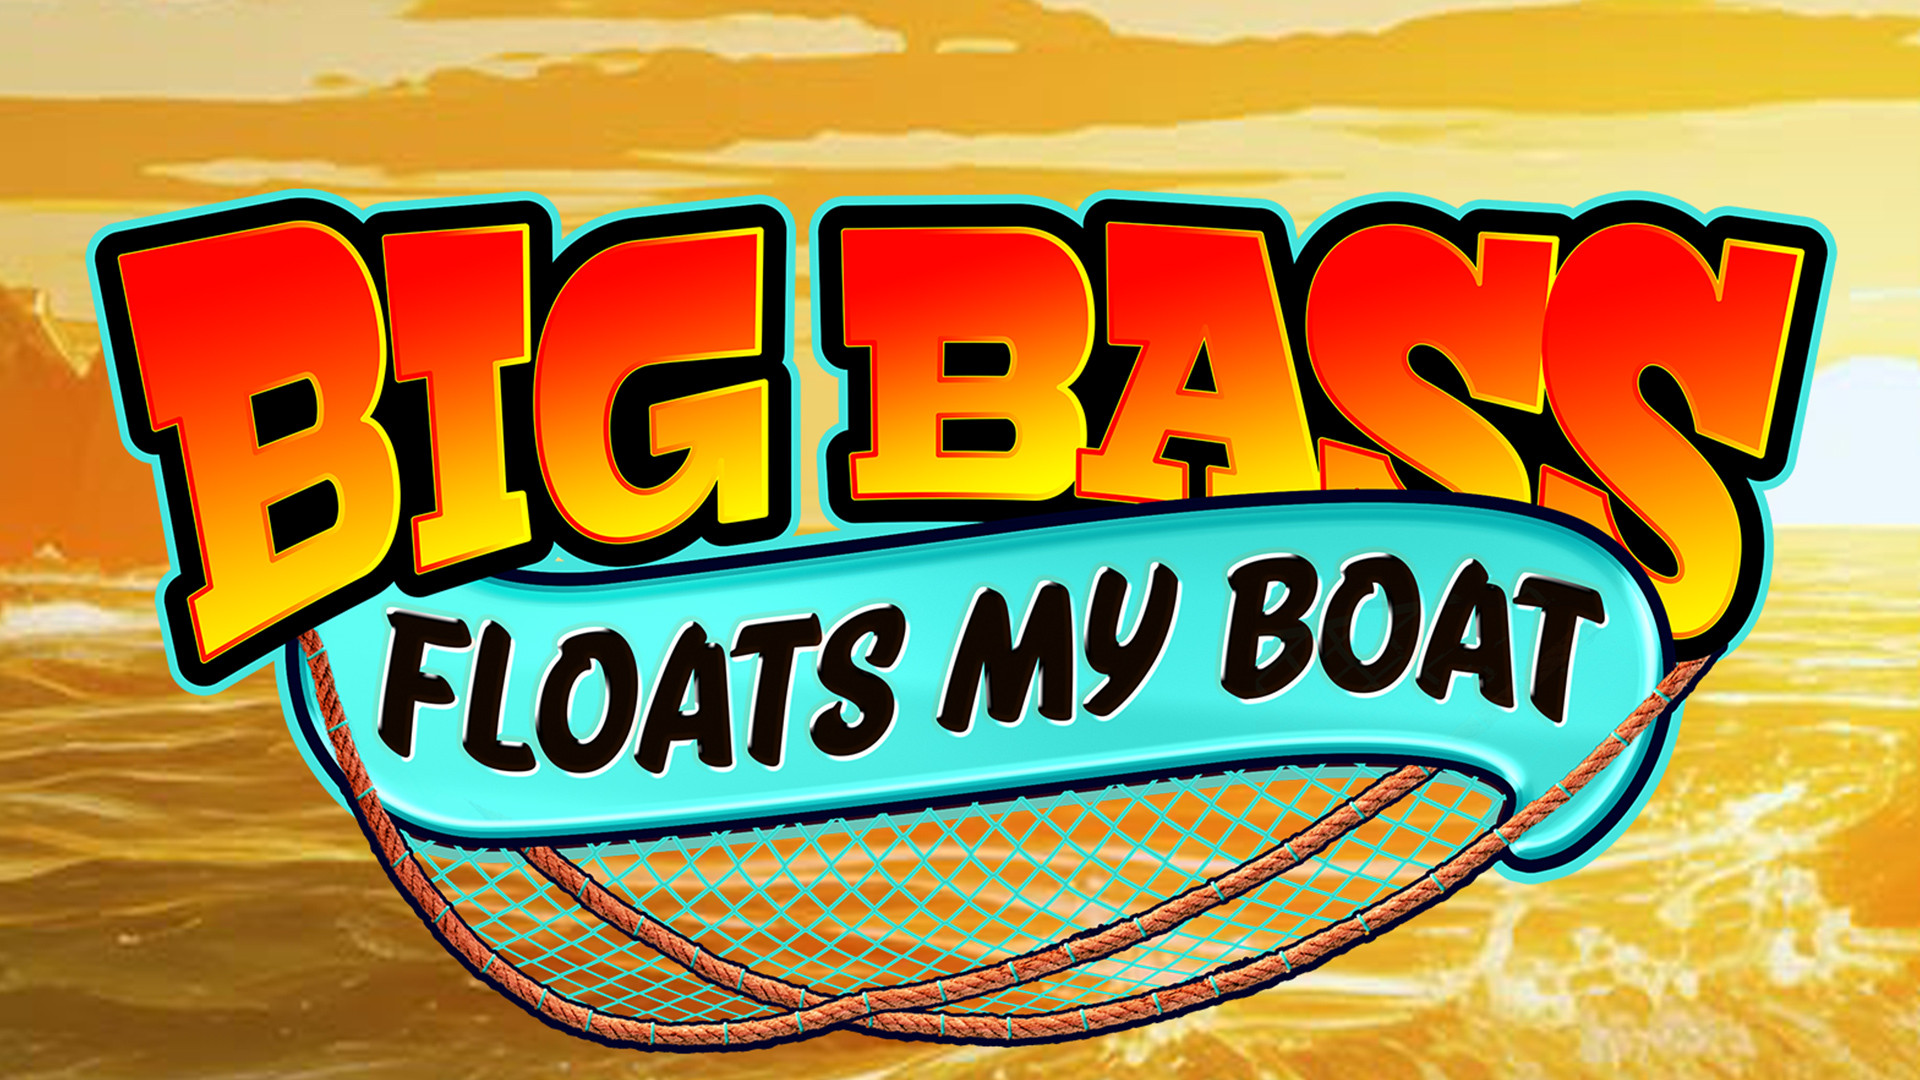 Big Bass Floats My Boat